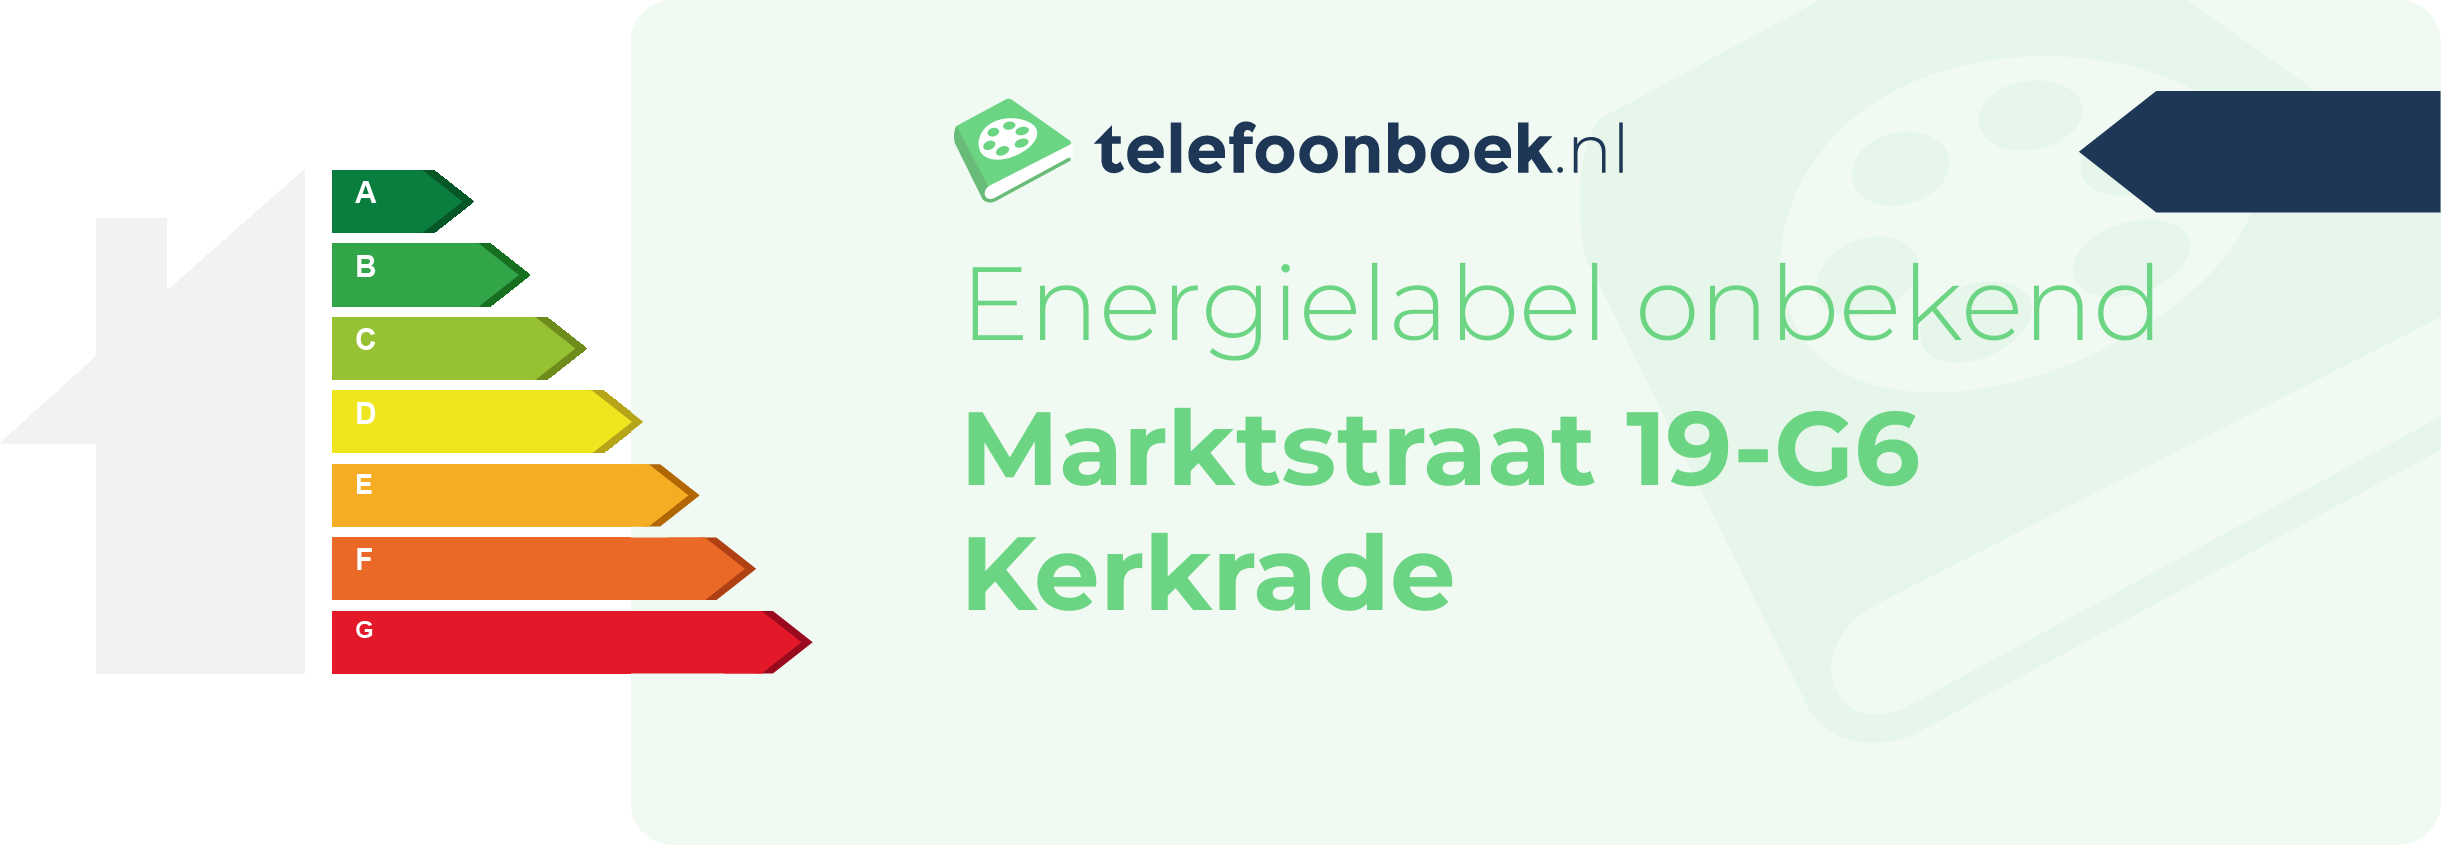 Energielabel Marktstraat 19-G6 Kerkrade